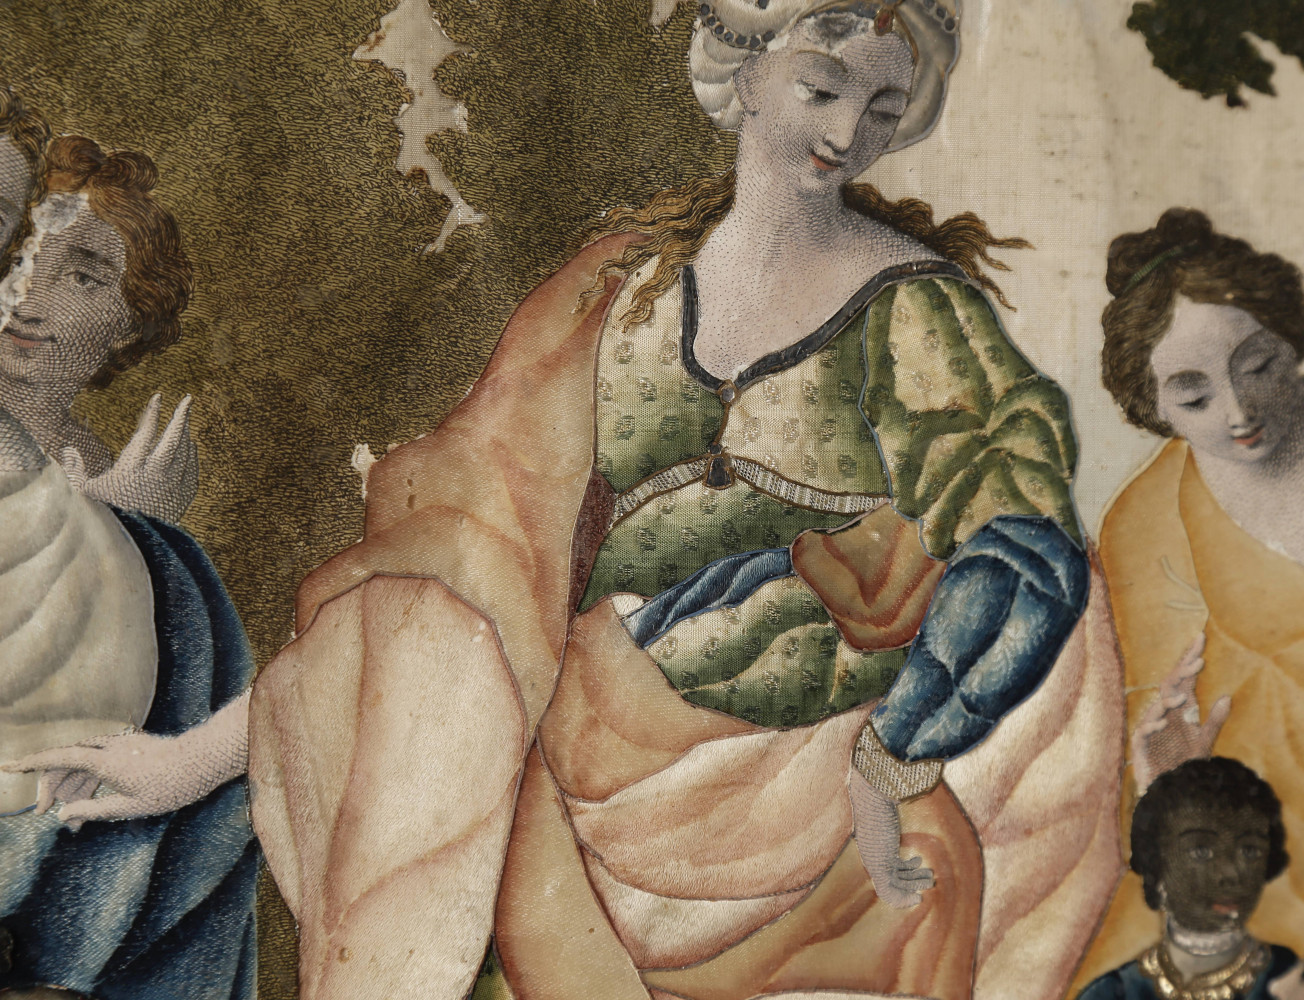 Fine and Rare Pair of Italian Paintings on Silk